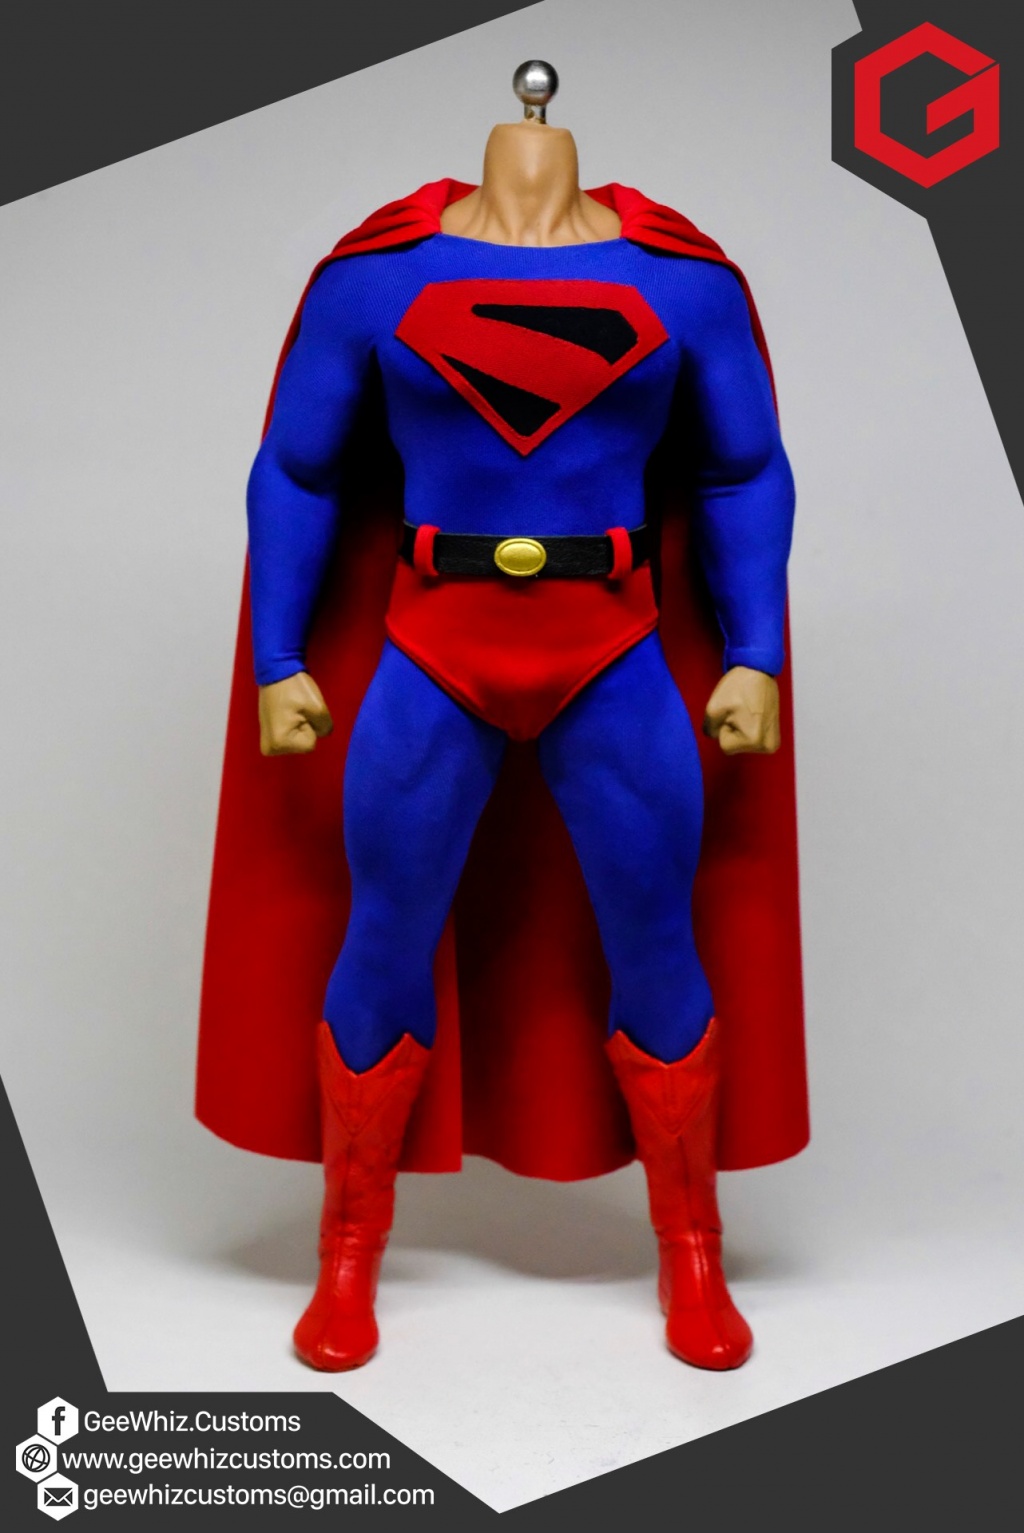 Geewhiz Customs: Kingdom Come Superman